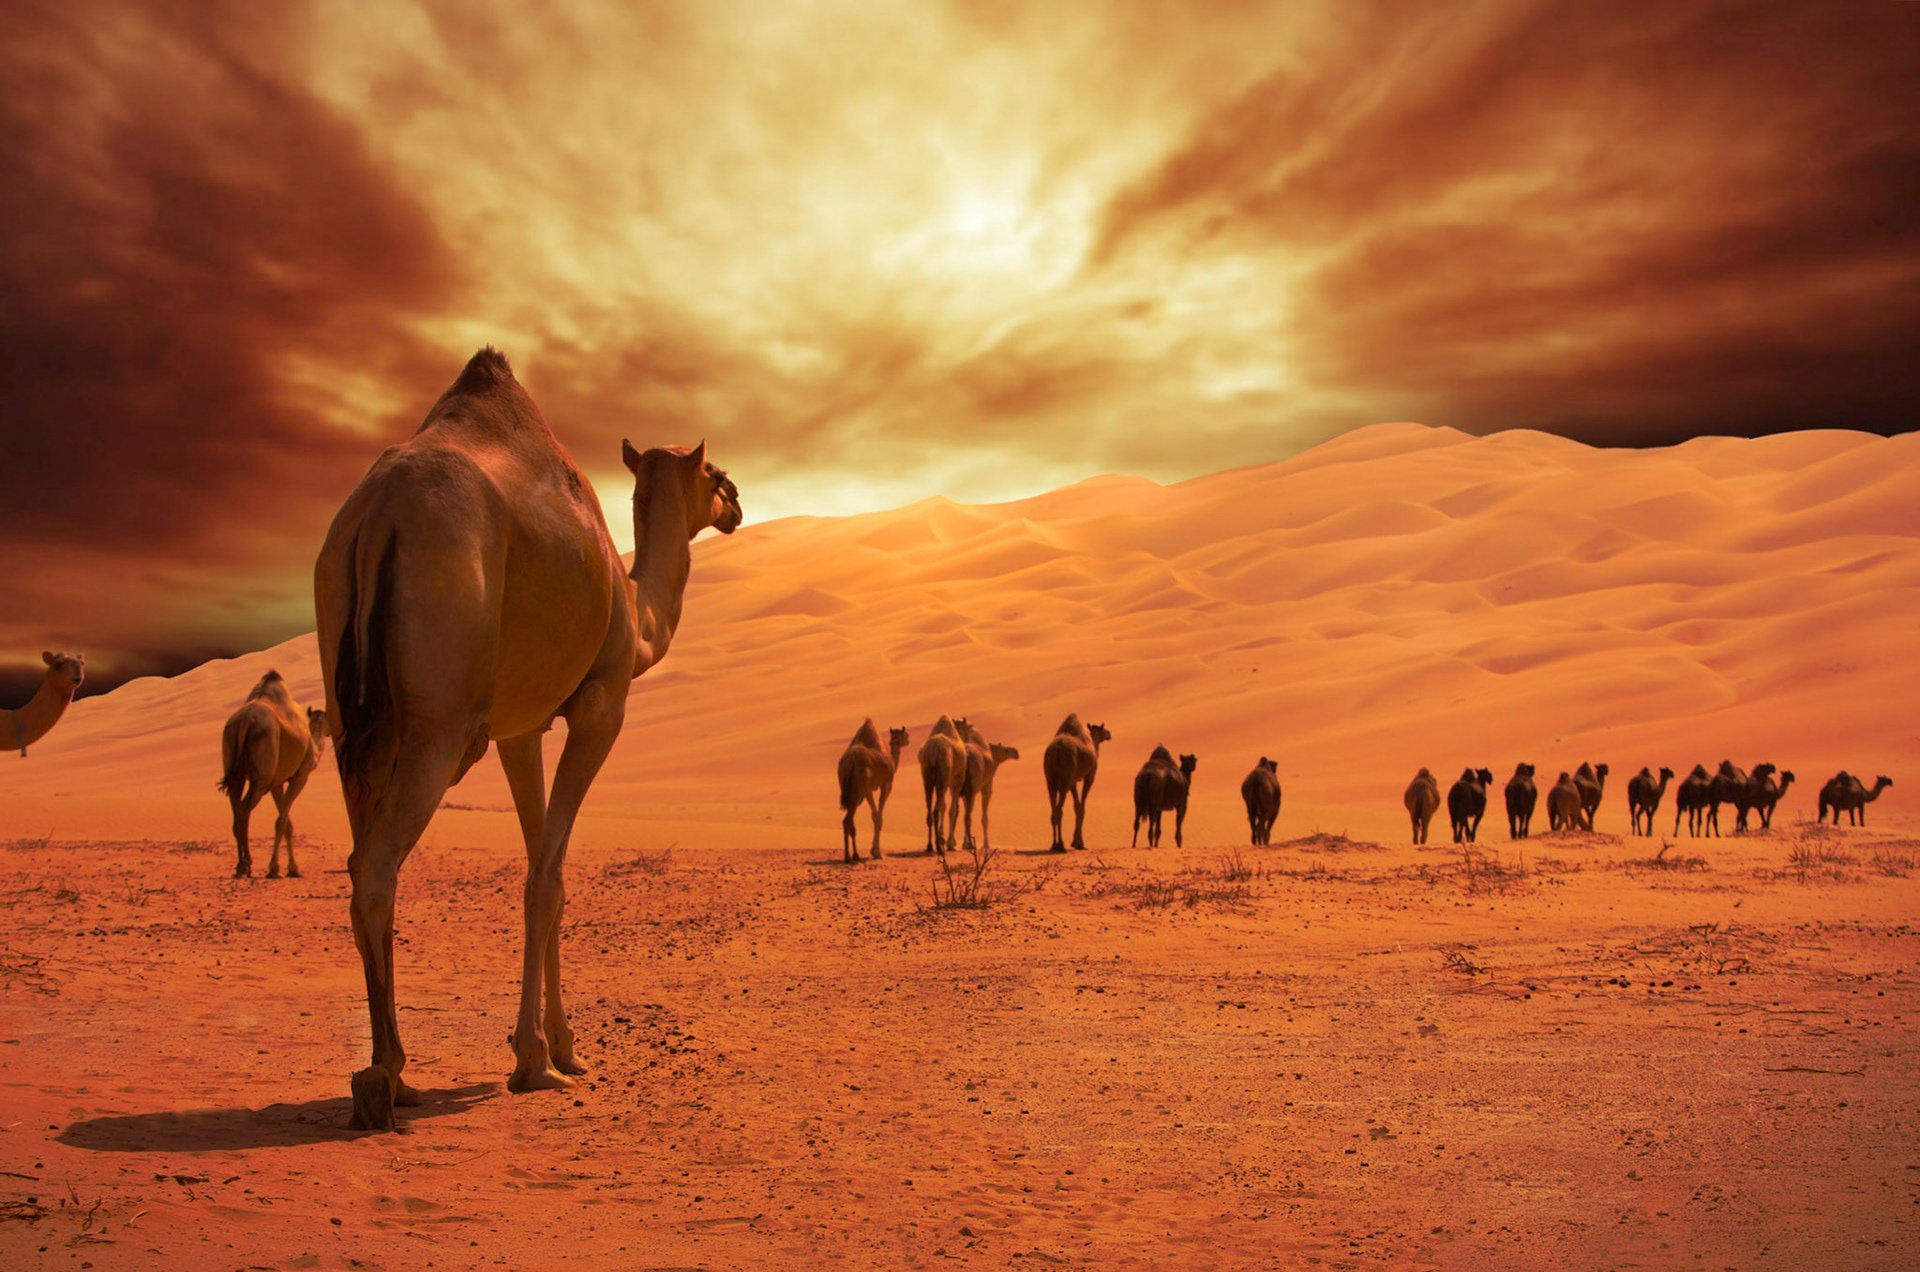 Далекий караван. Караван бактрианов. Абу Даби верблюд. Караван с верблюдами в пустыне. Пустыня Тенере.